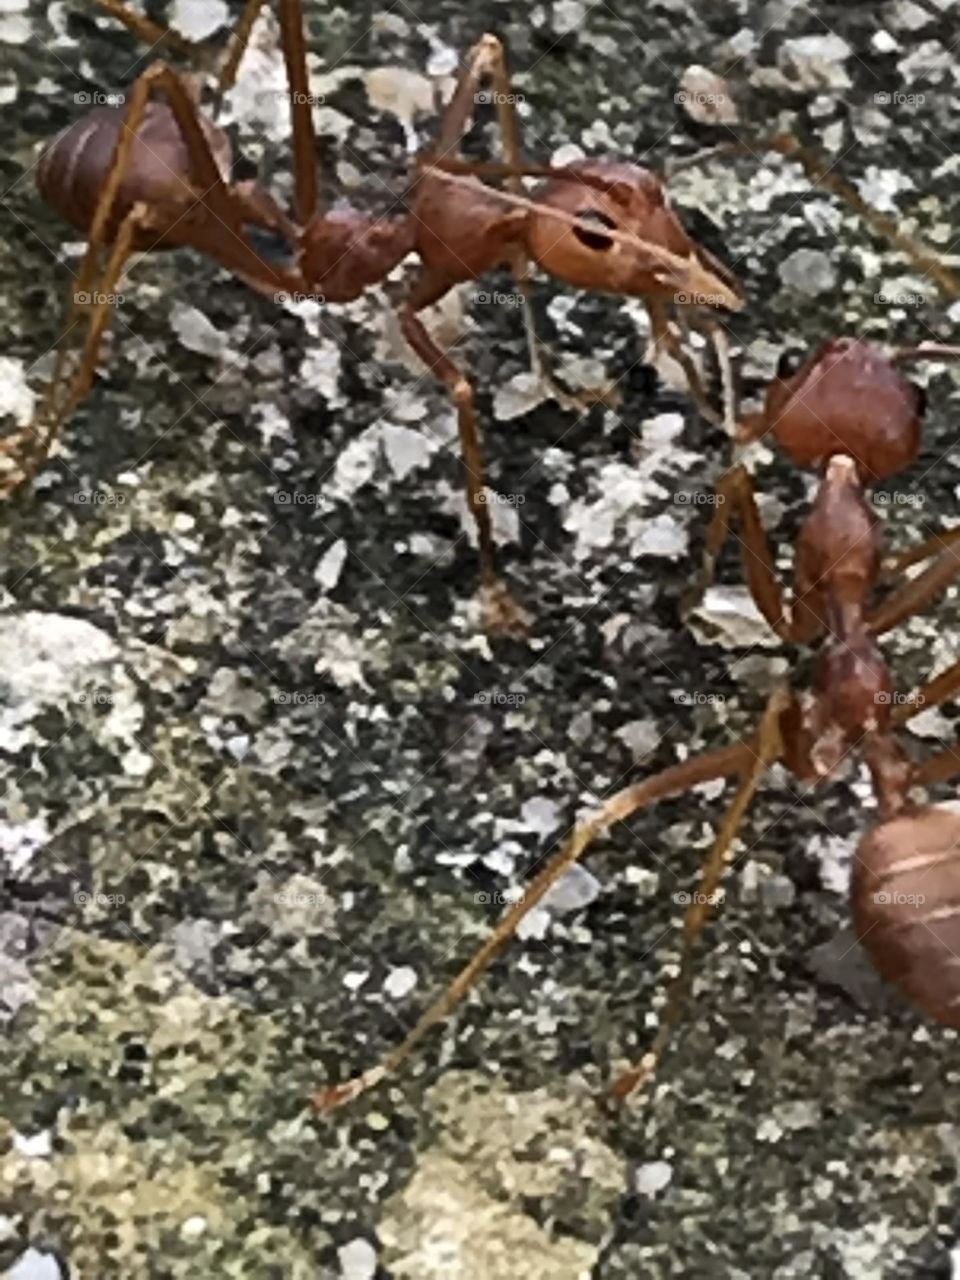 Ant's communicating